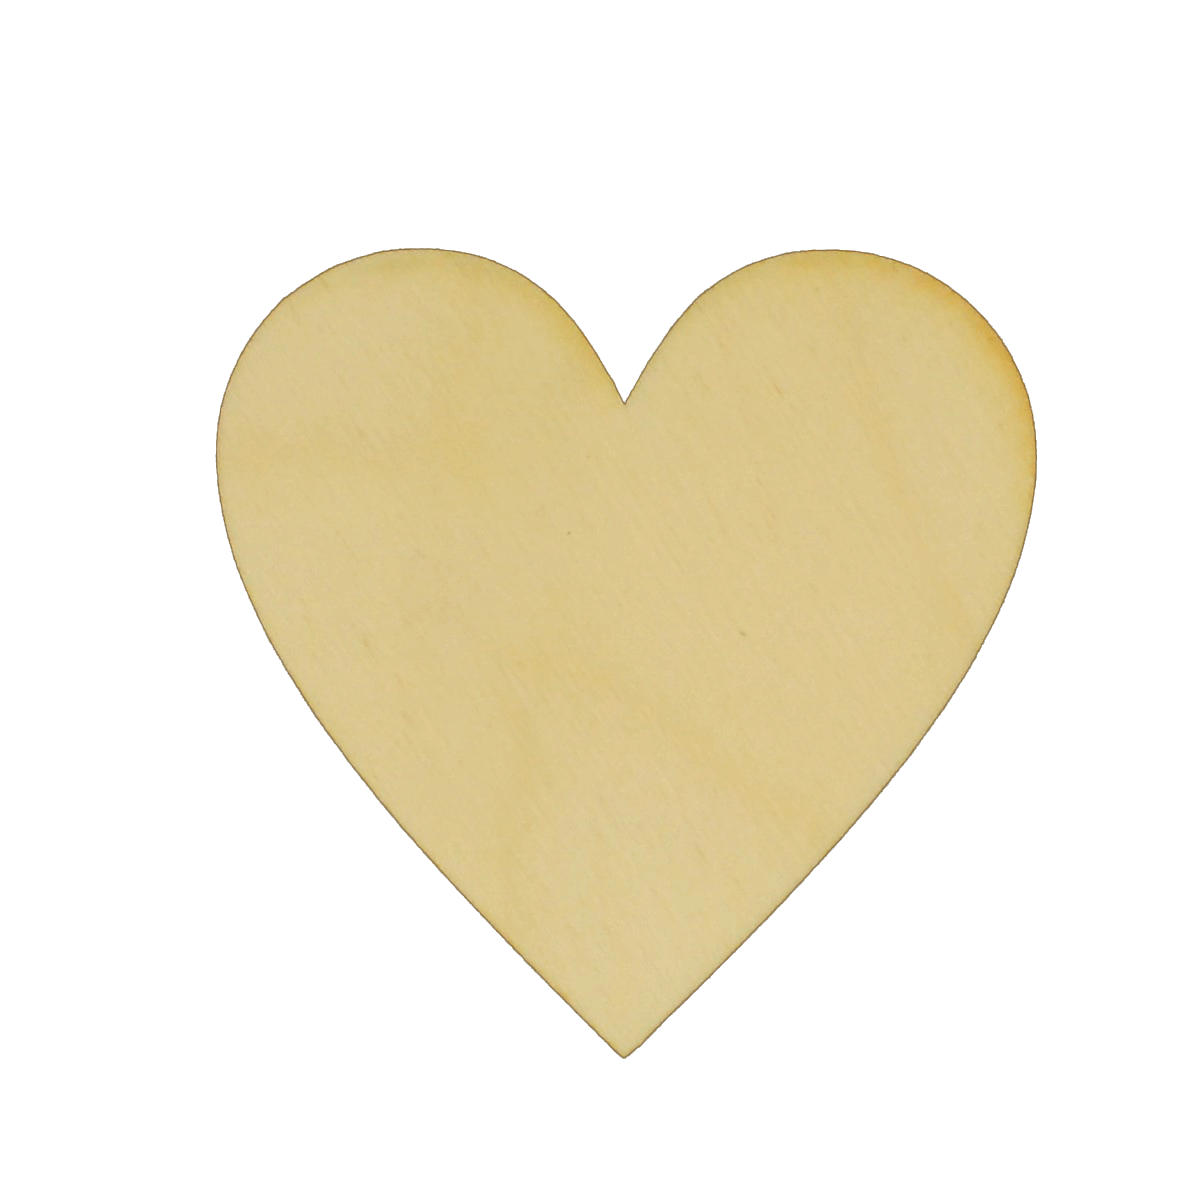 Love Heart Wood Cutout - Large 12 x 10.5 1/4 Baltic Birch Plywood